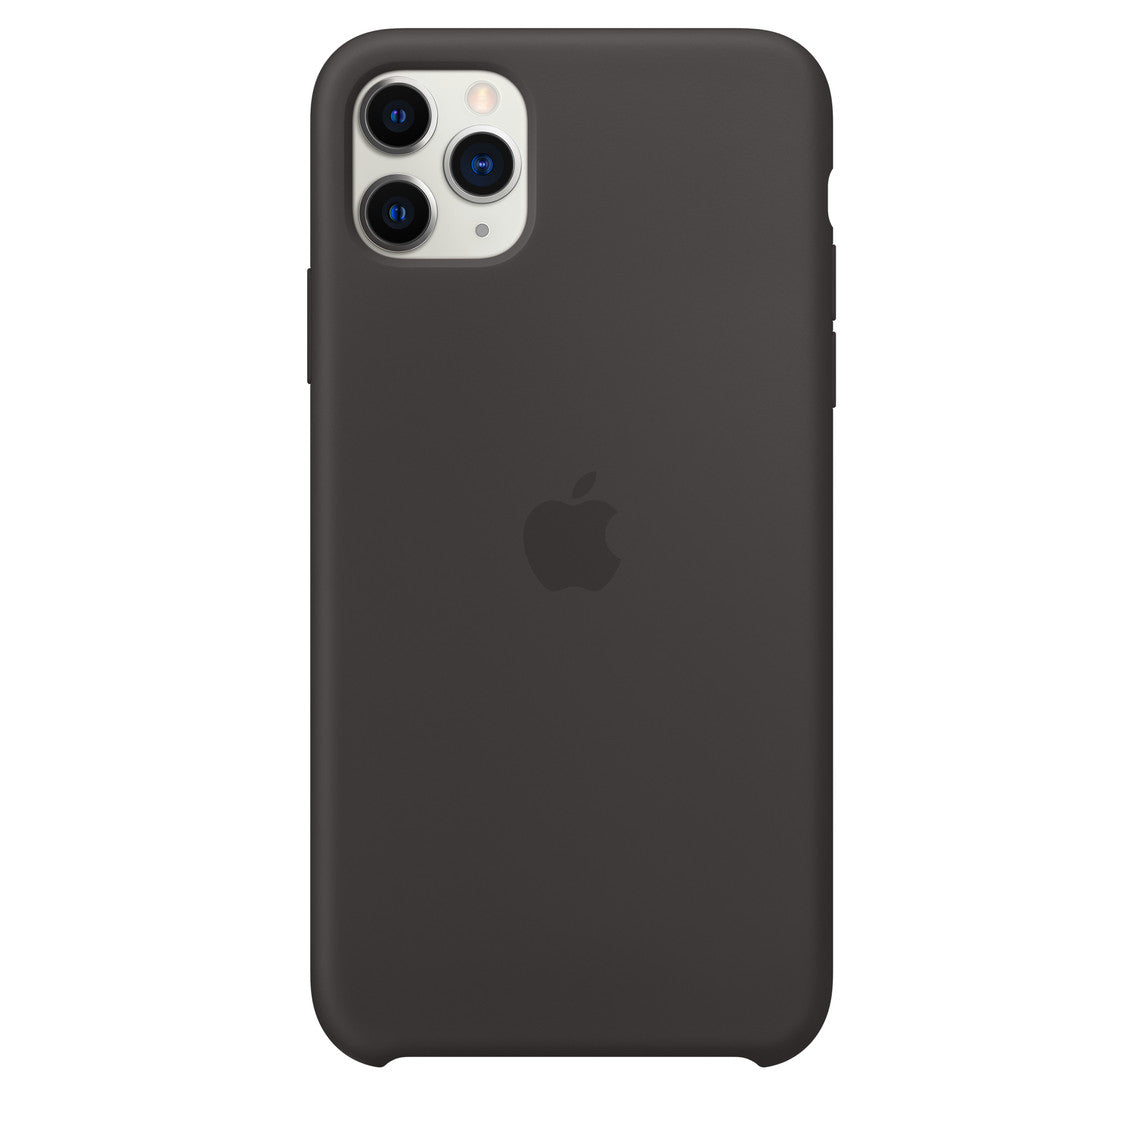 Apple iPhone 11 Pro Max Silicone Case - Midnight